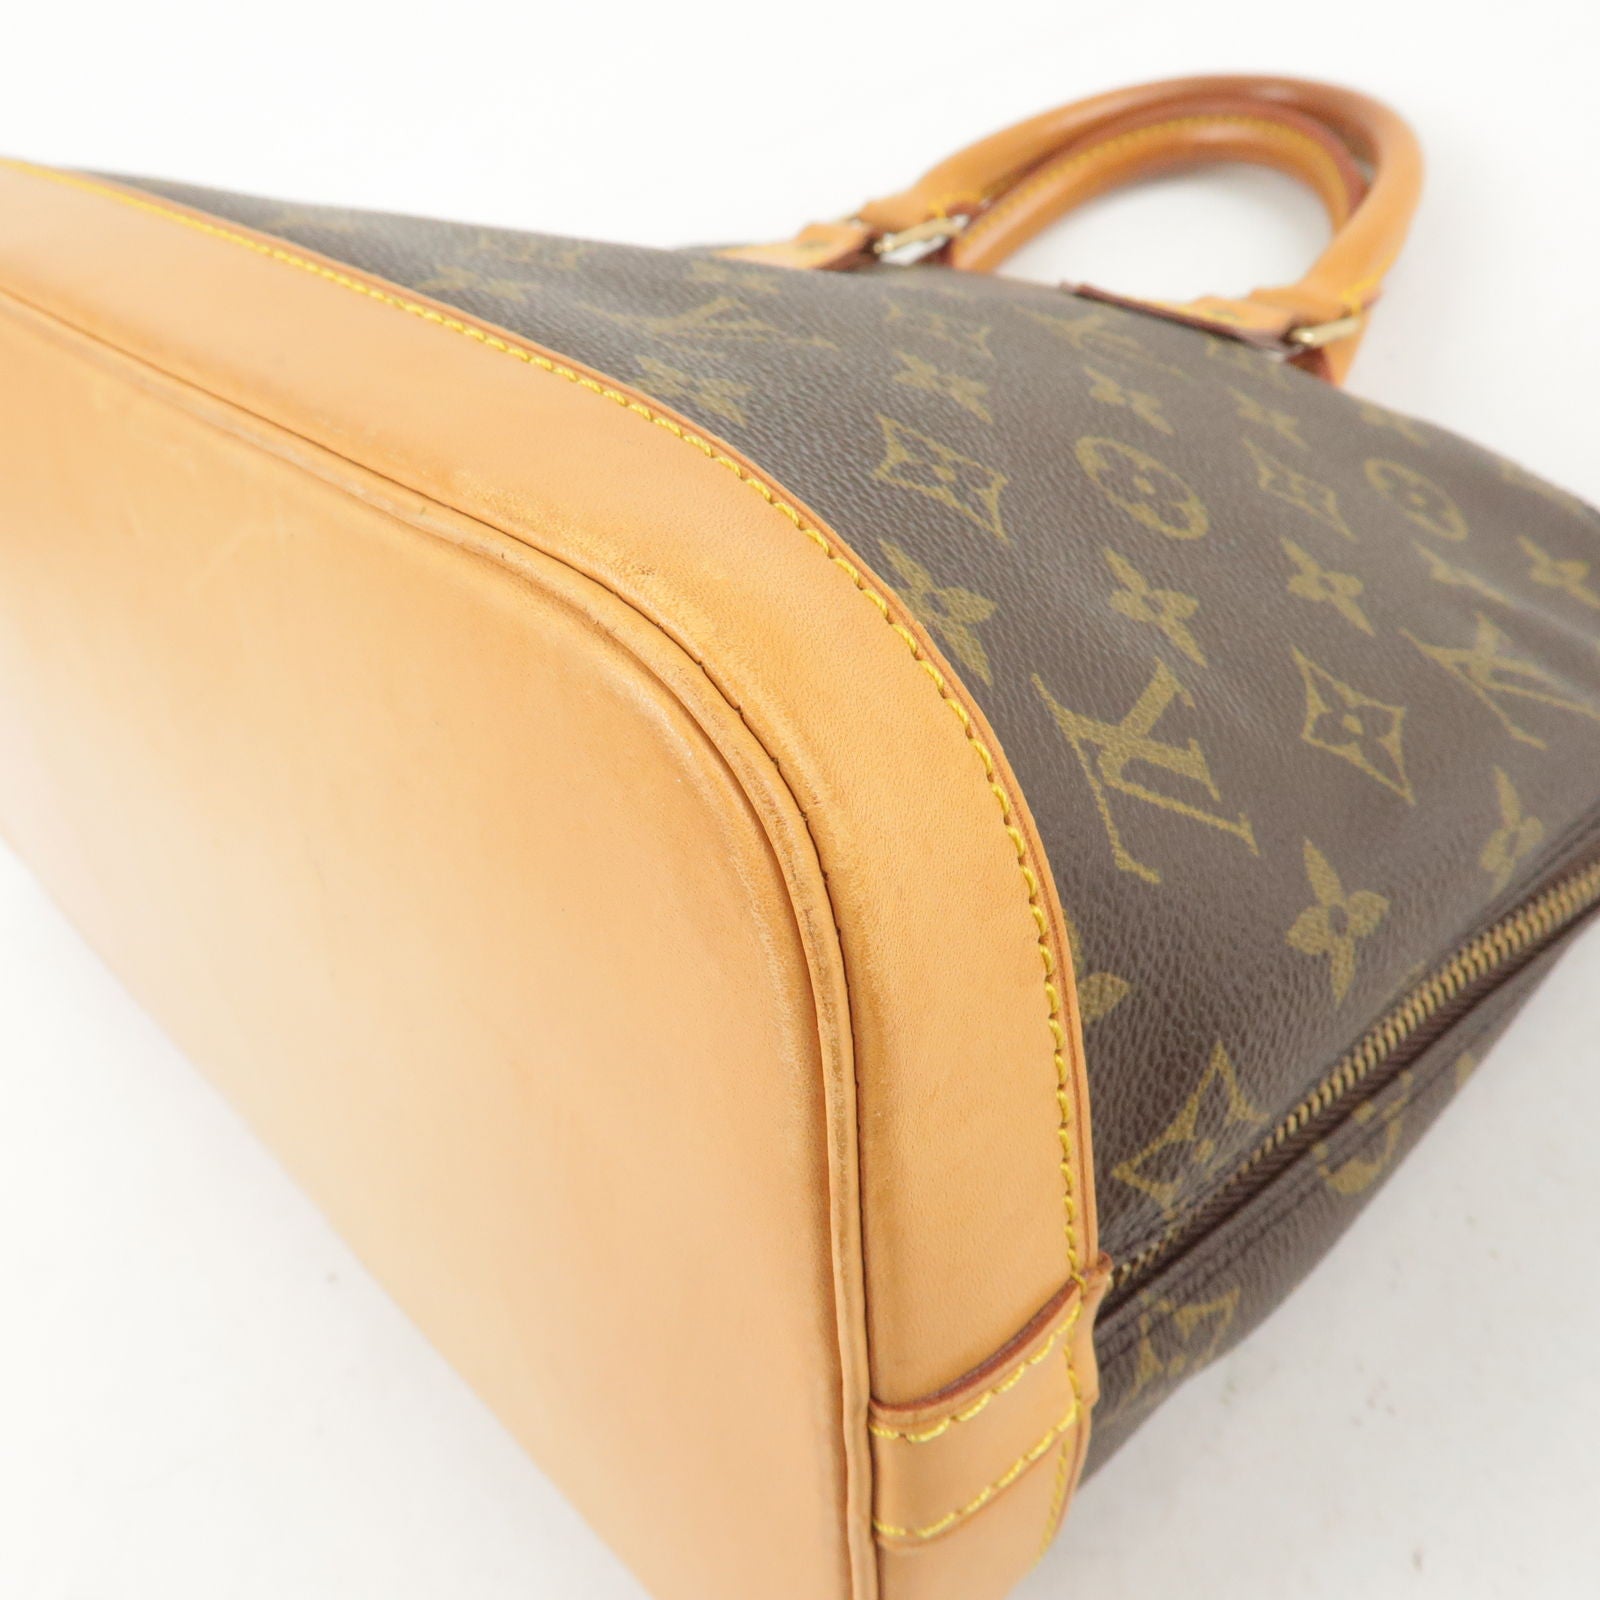 Buy [Used] LOUIS VUITTON Alma PM Handbag Monogram M51130 from